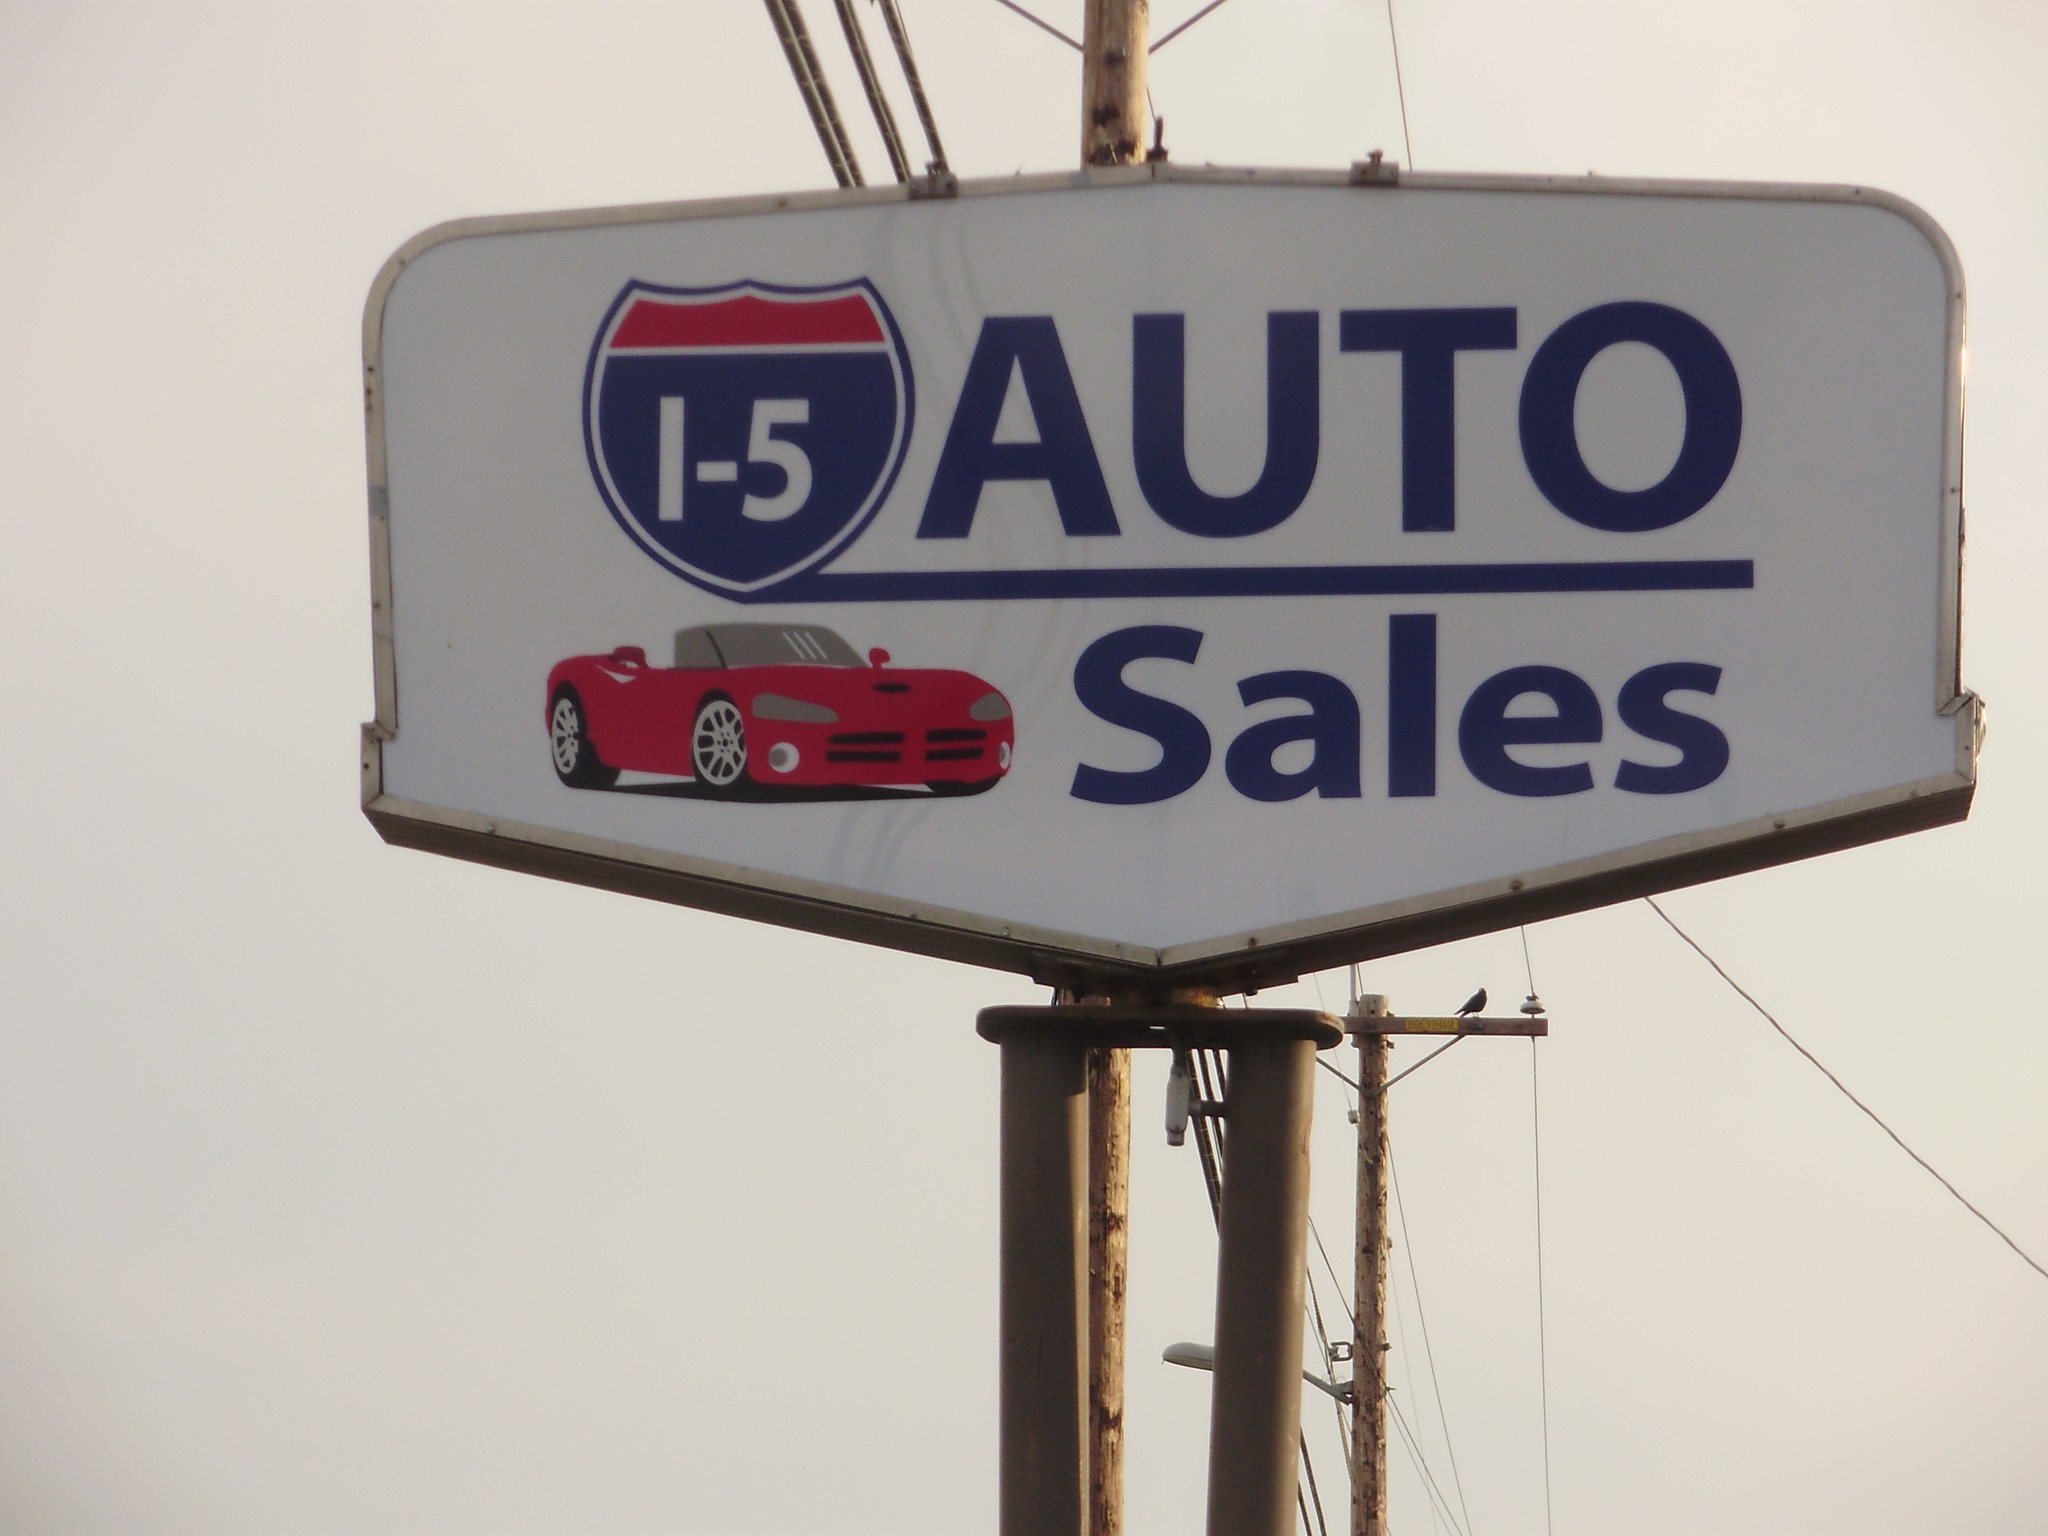 I 5 Auto Sales